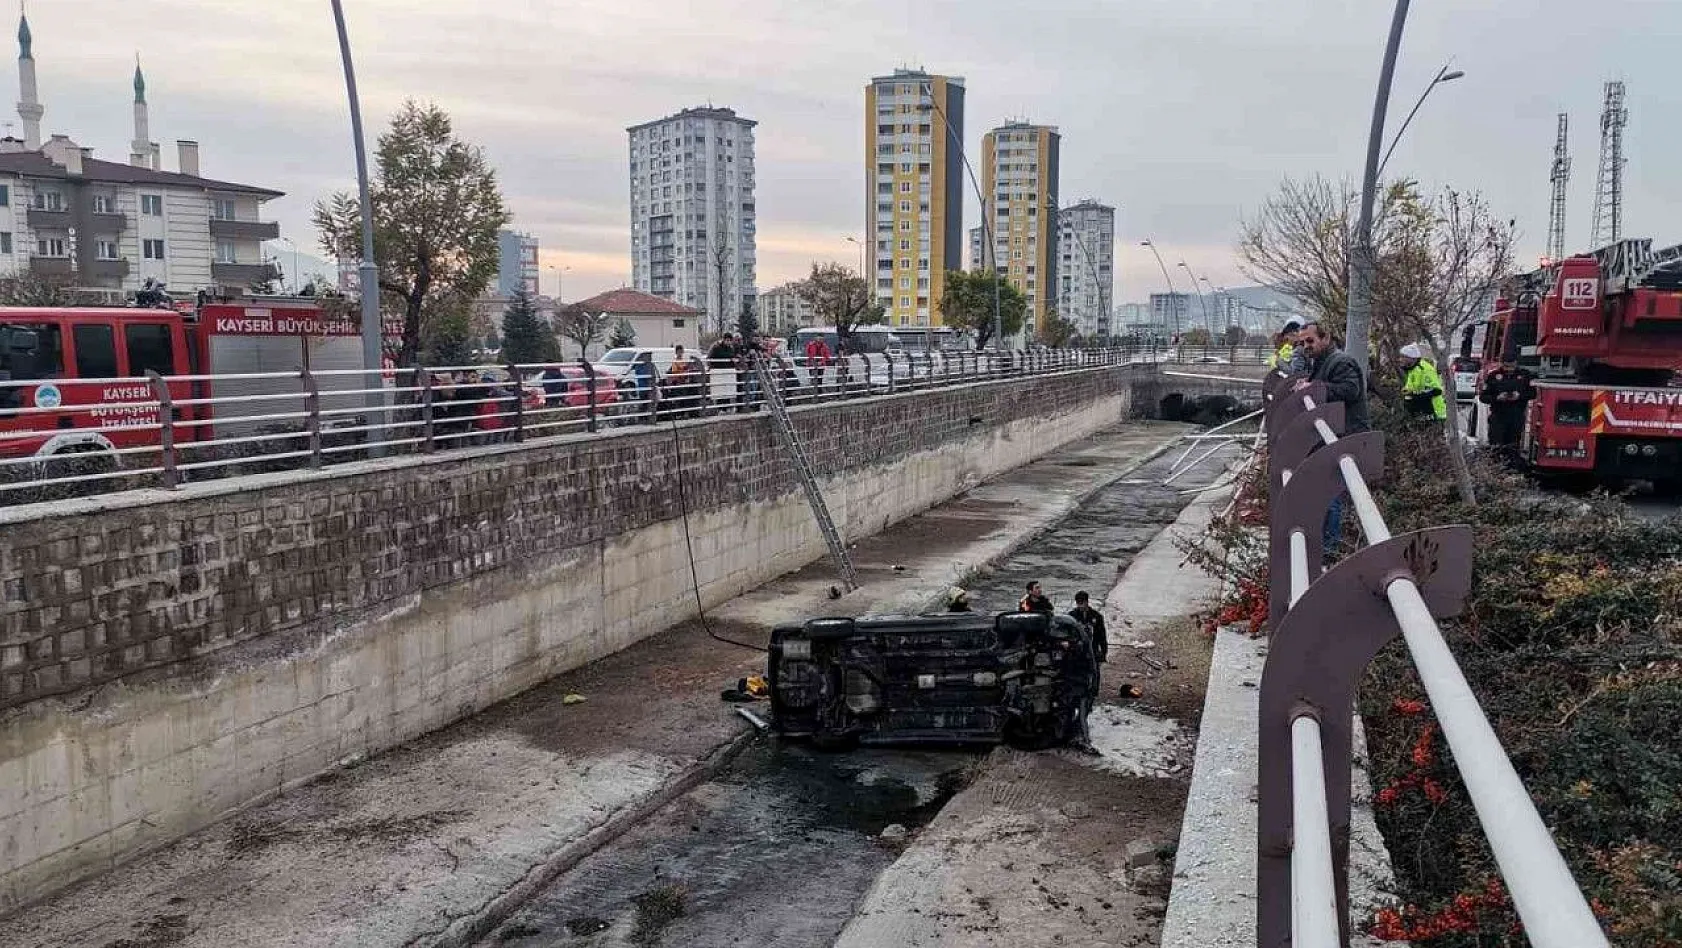 Kanala düşen otomobil alev alev yandı: 4 yaralı